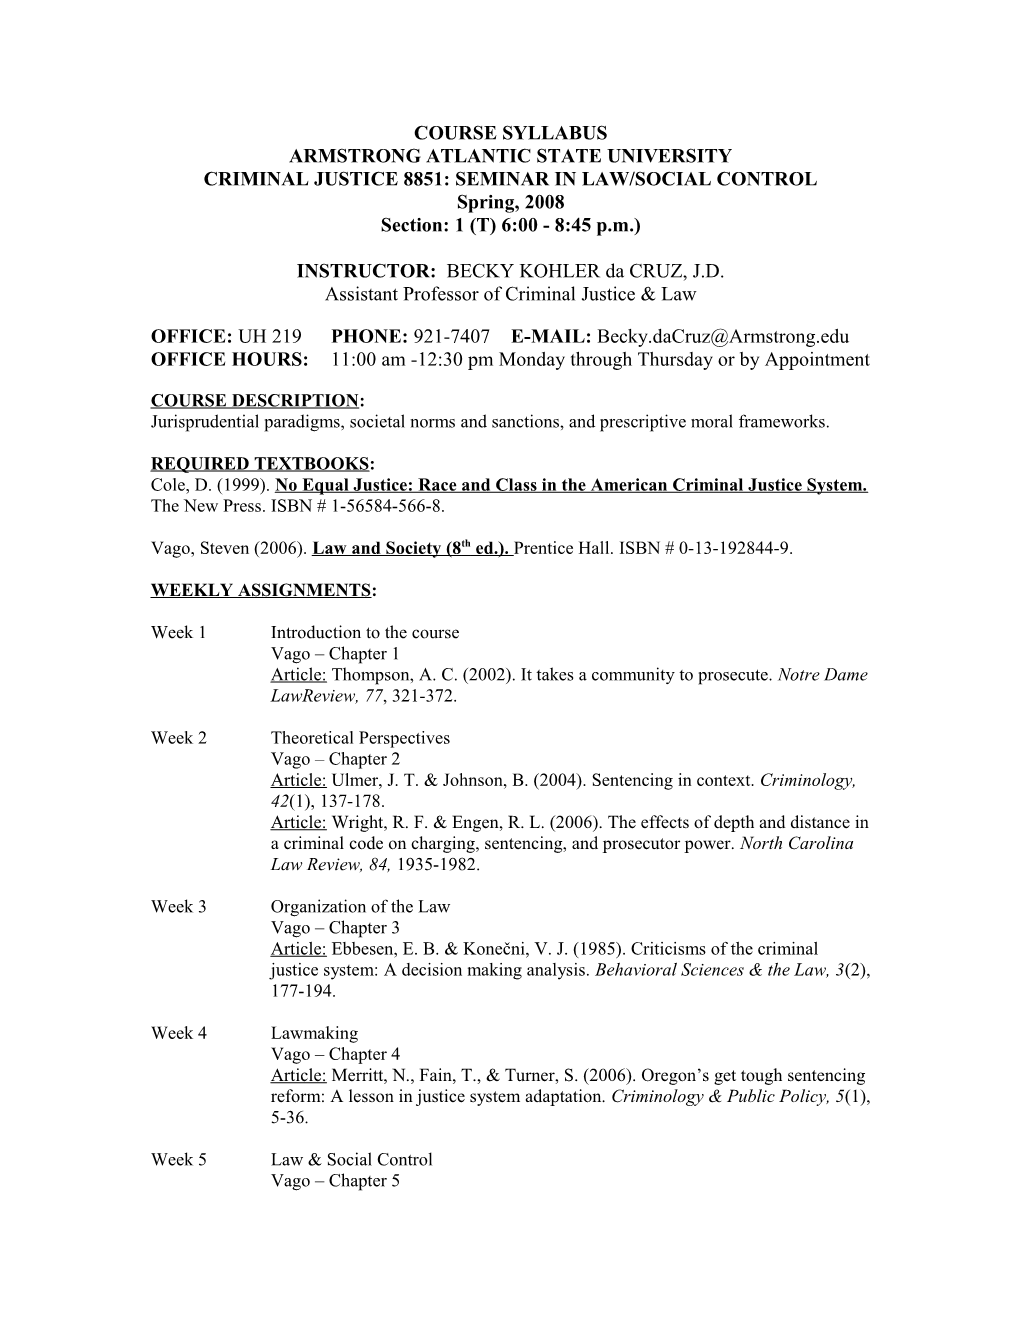 Criminal Justice 8851: Seminar in Law/Social Control